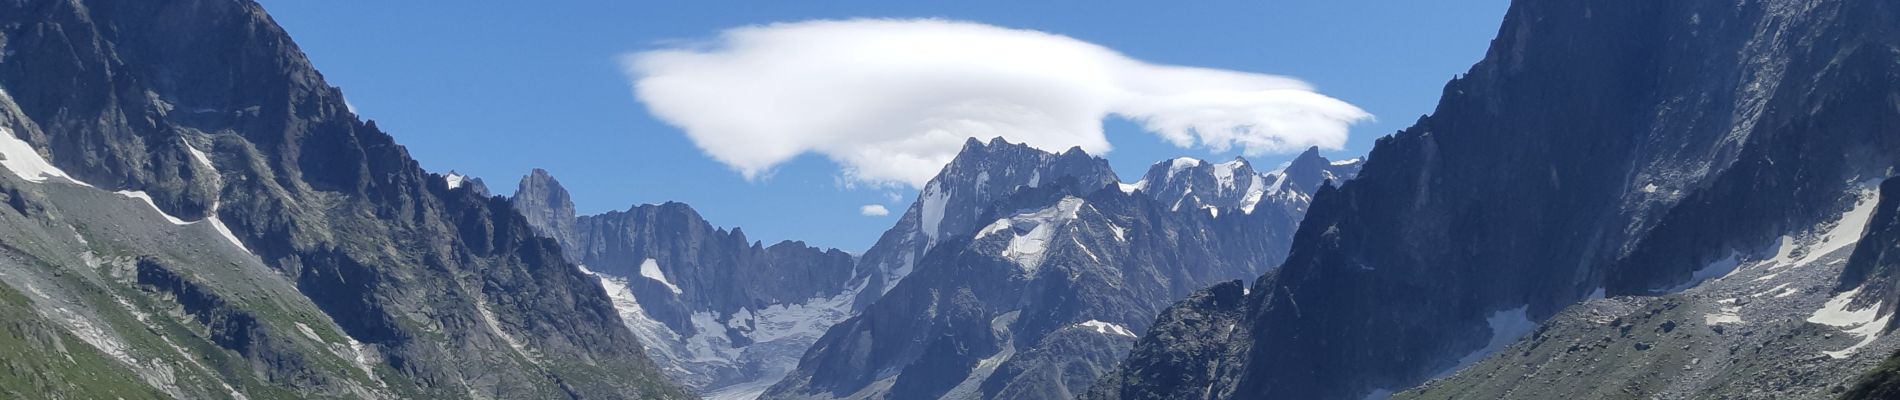 Tour Wandern Chamonix-Mont-Blanc - cadeau noel - Photo